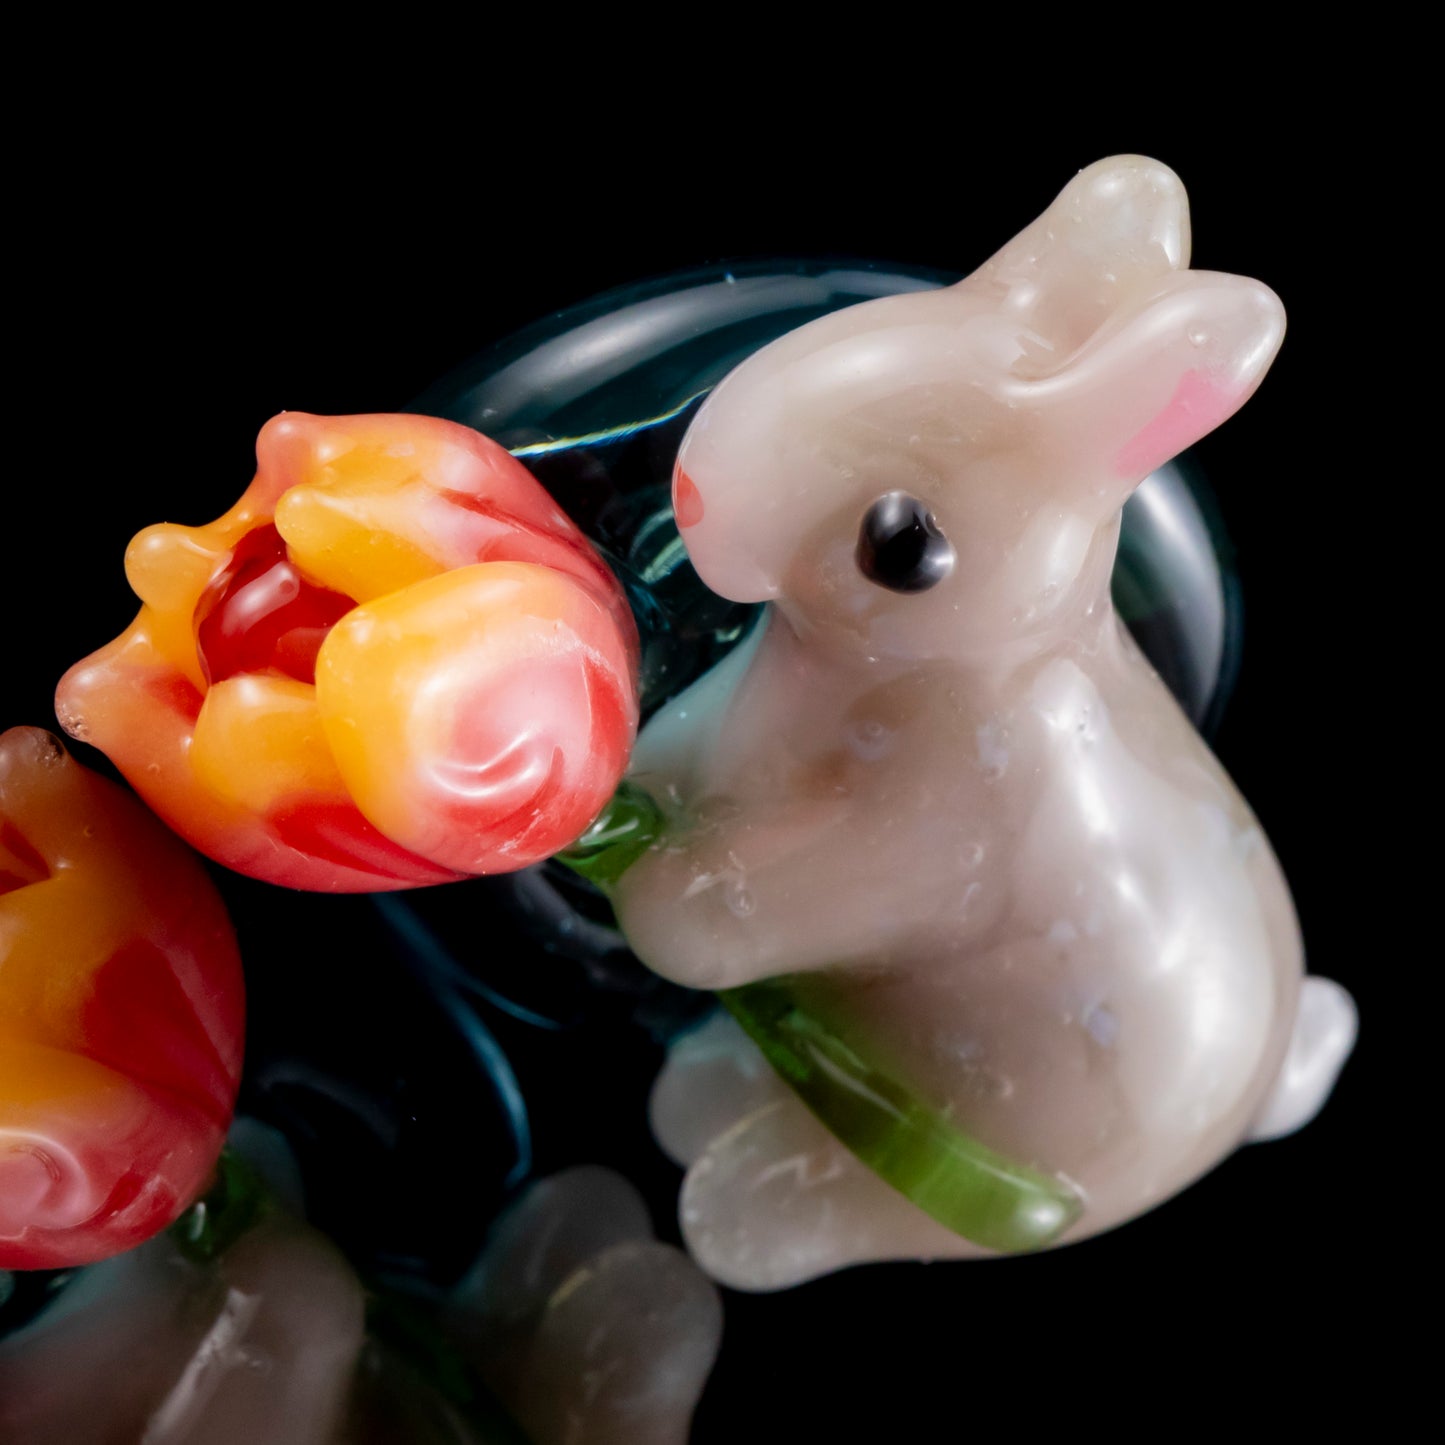 Rabbit and Tulip Broach by Tomomi Handa